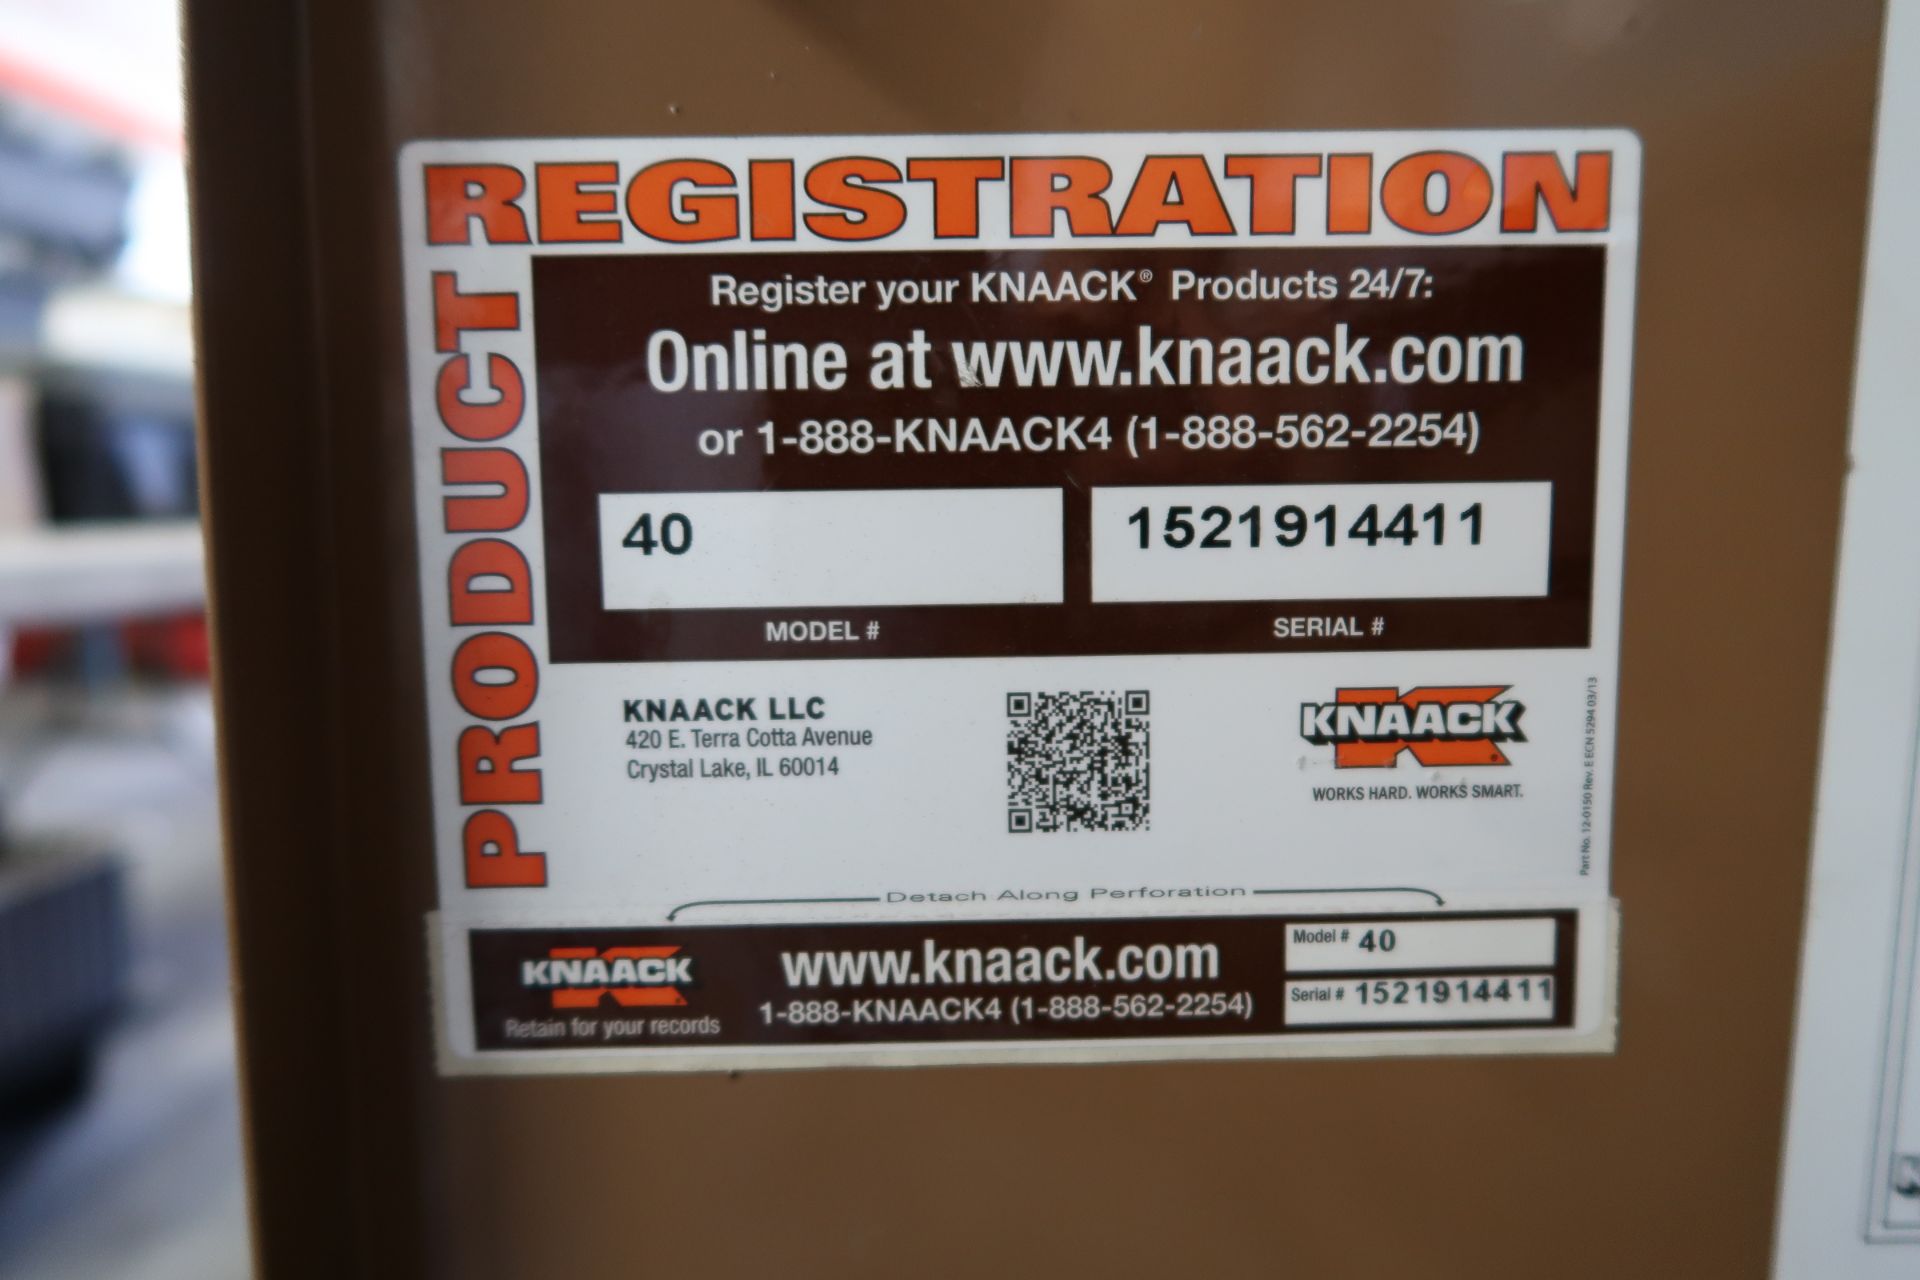 Knaack mdl. 44 Rolling Job Box (SOLD AS-IS - NO WARRANTY) - Image 4 of 4